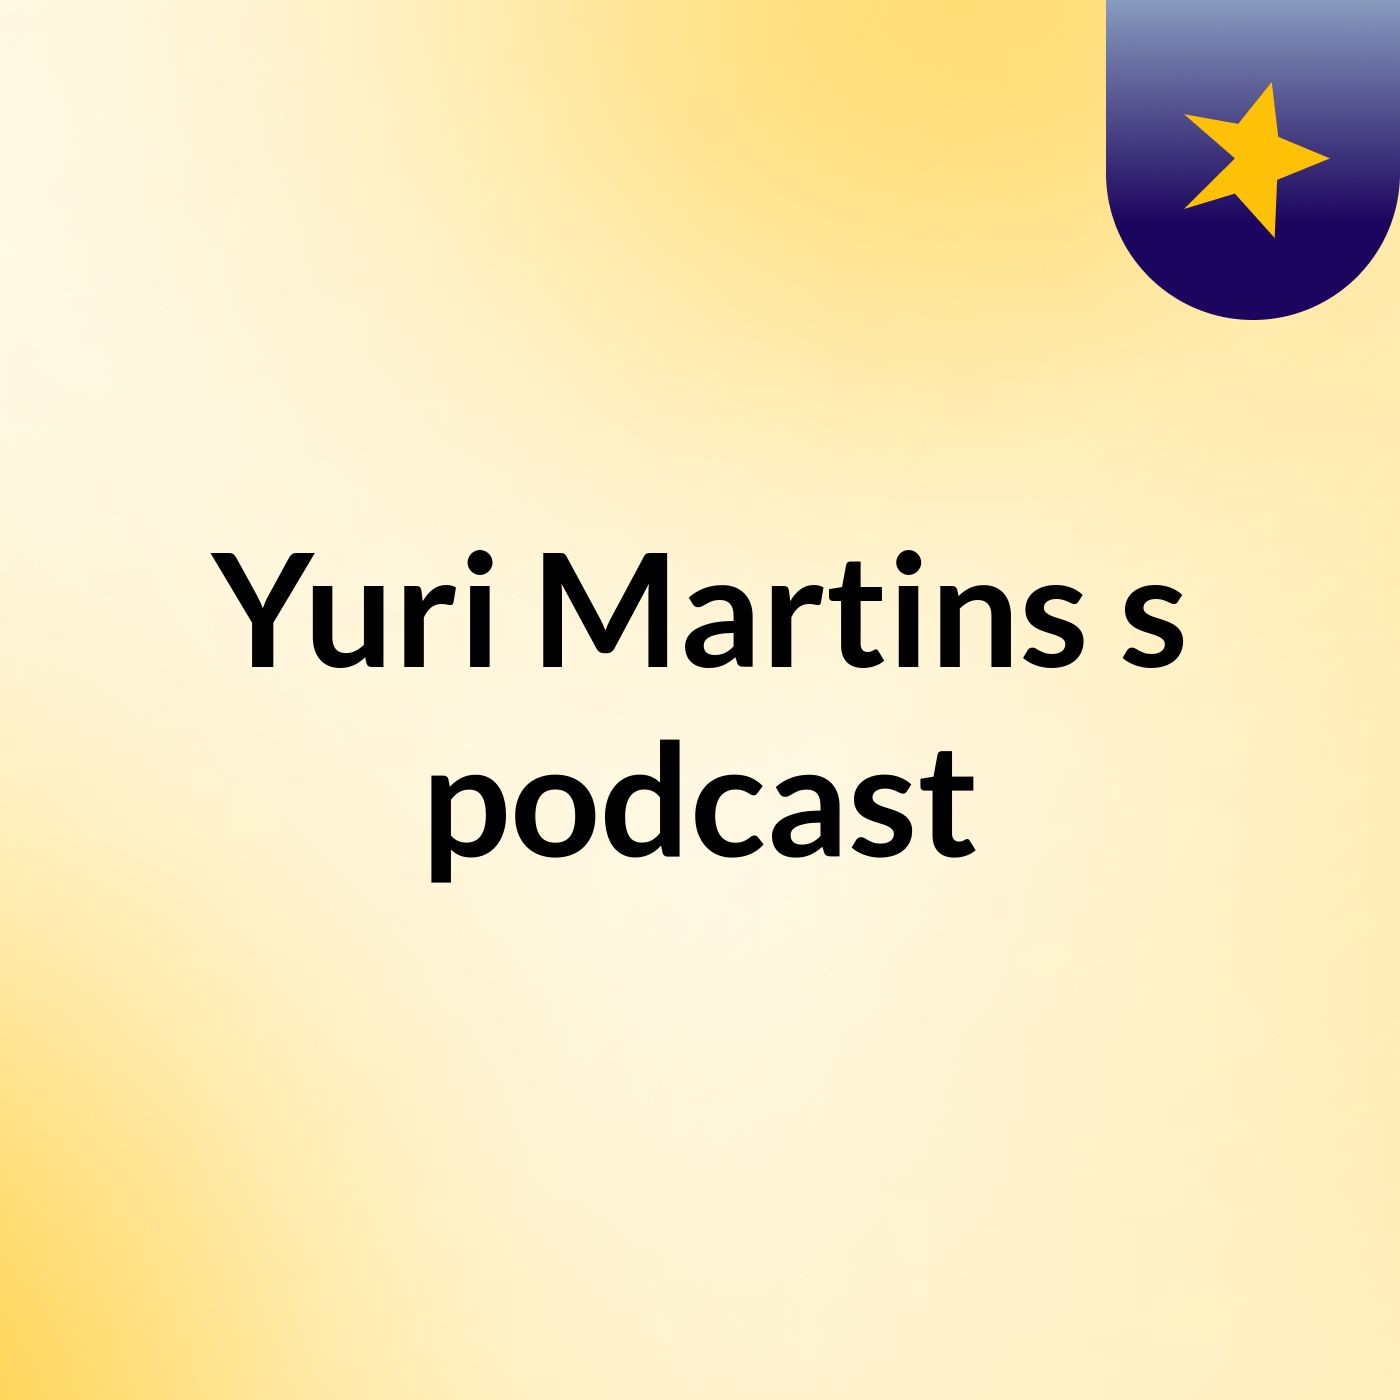 Yuri Martins's podcast